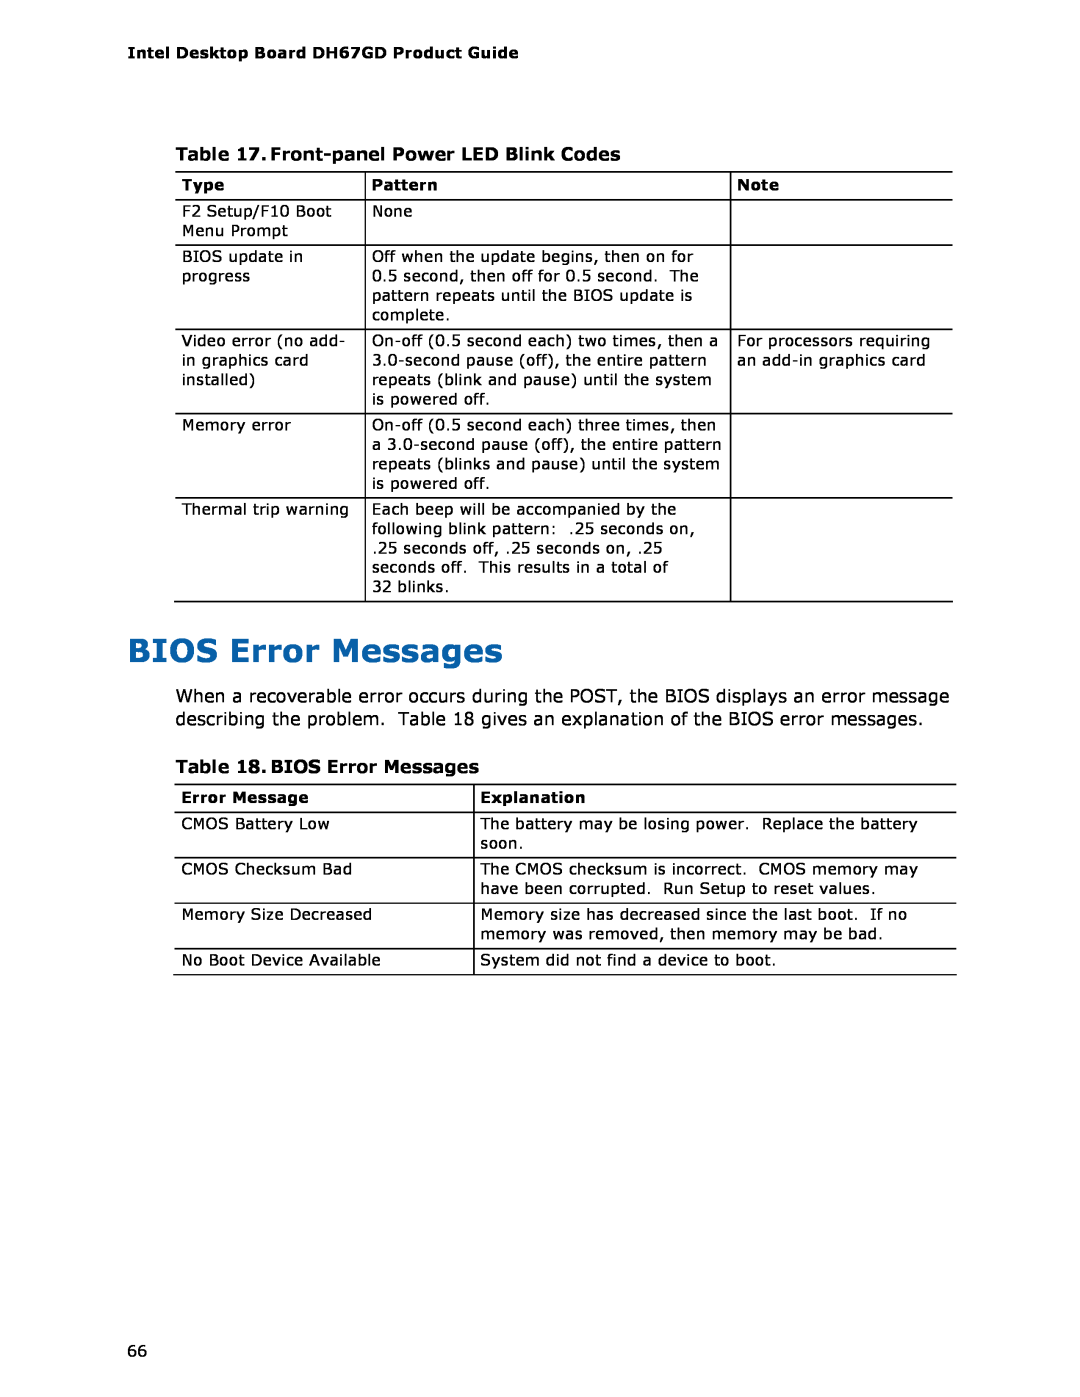 Intel BLKDH67GDB3, G13841-001 manual BIOS Error Messages, Front-panel Power LED Blink Codes 